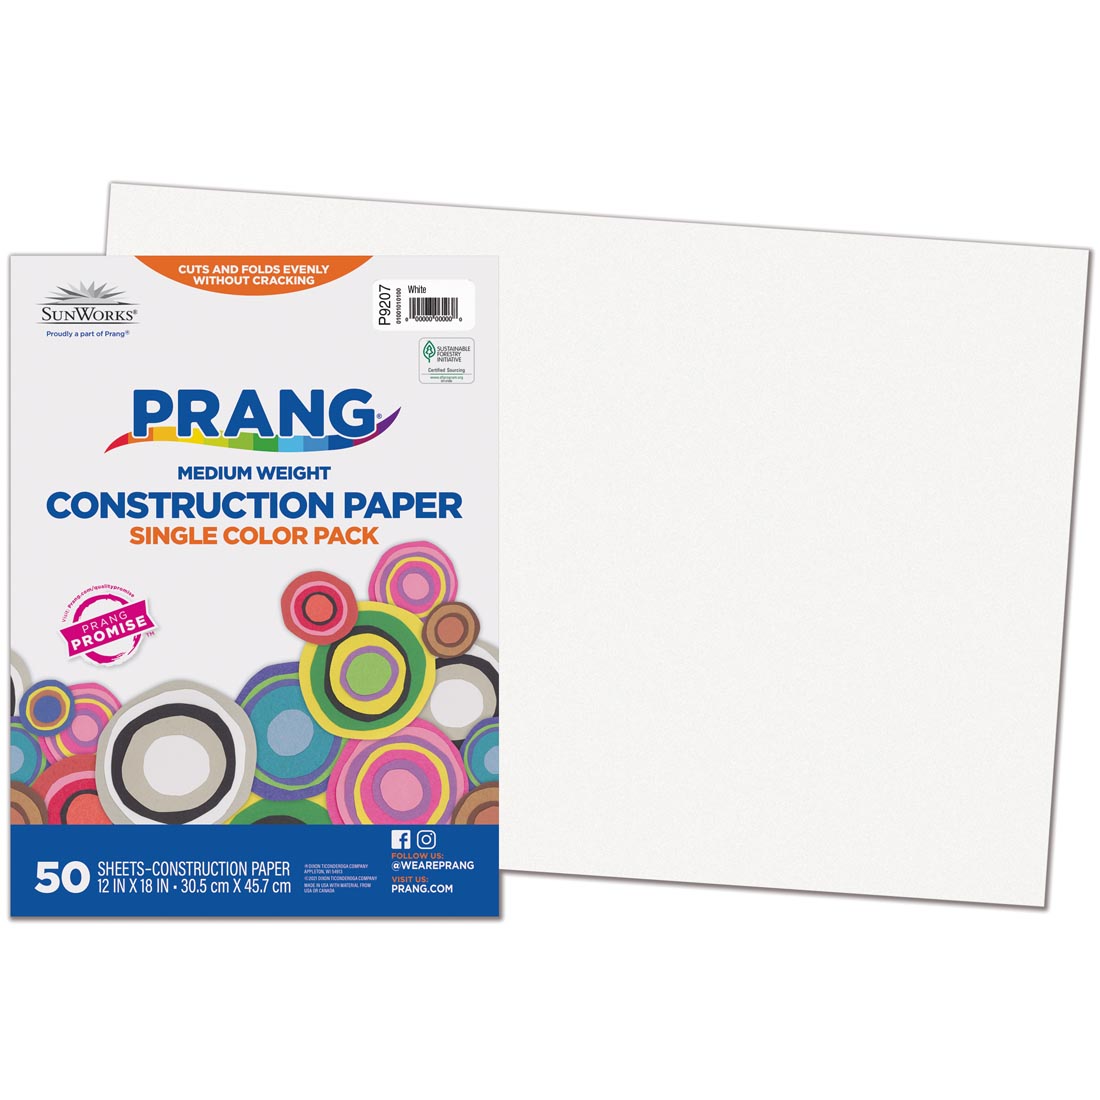 Prang Construction Paper 12x18 White